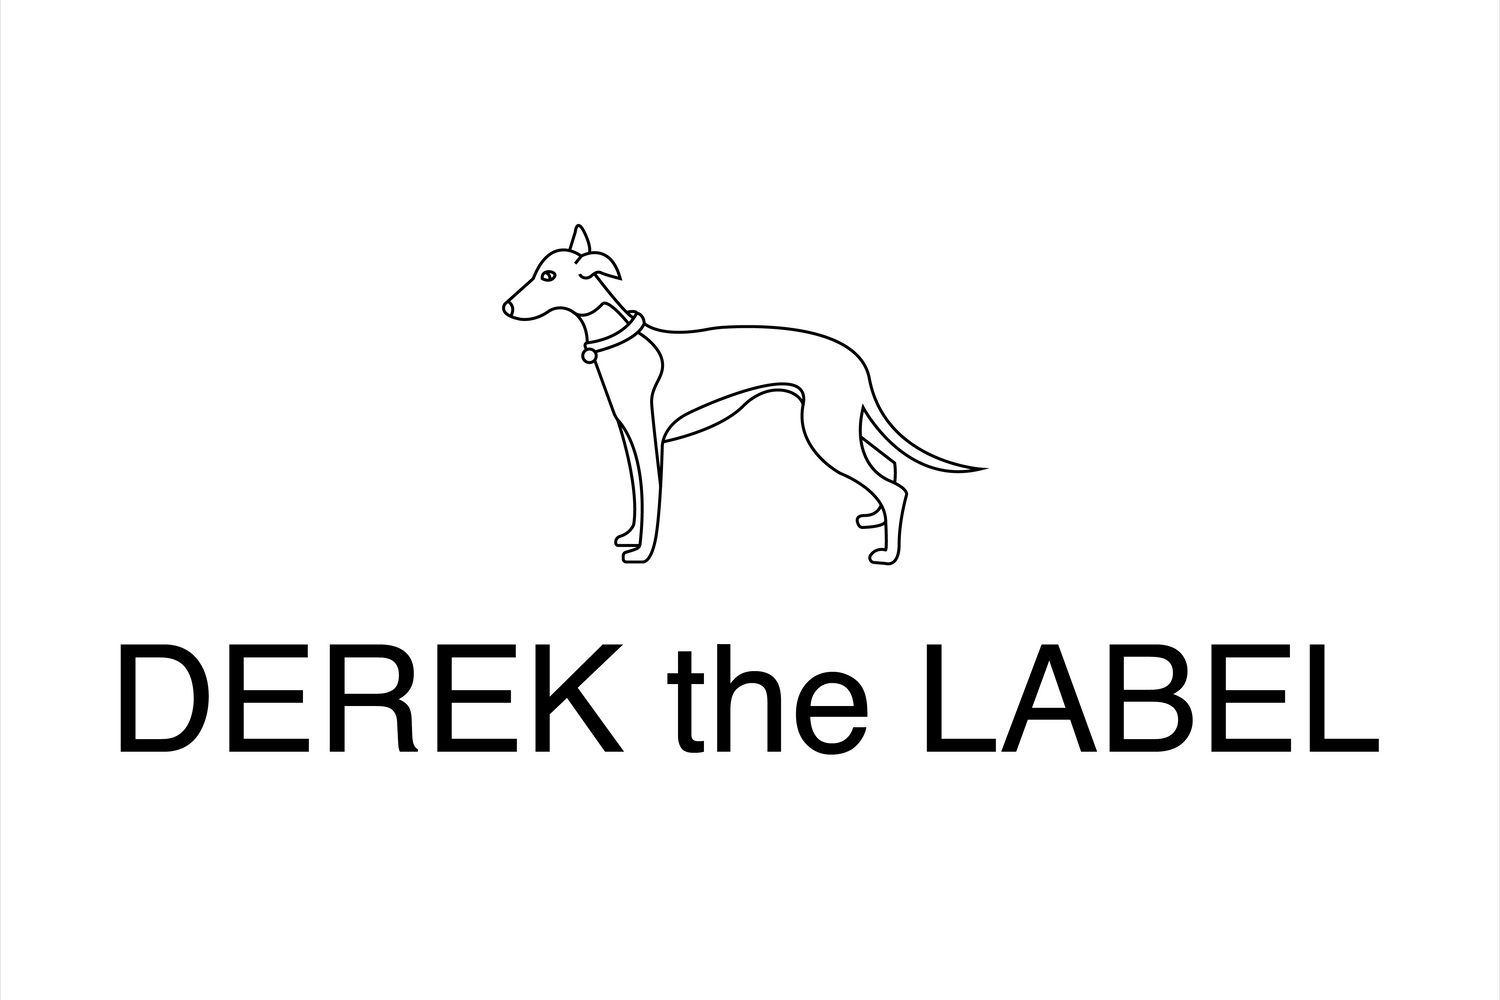 Derek the Label slim logo 2